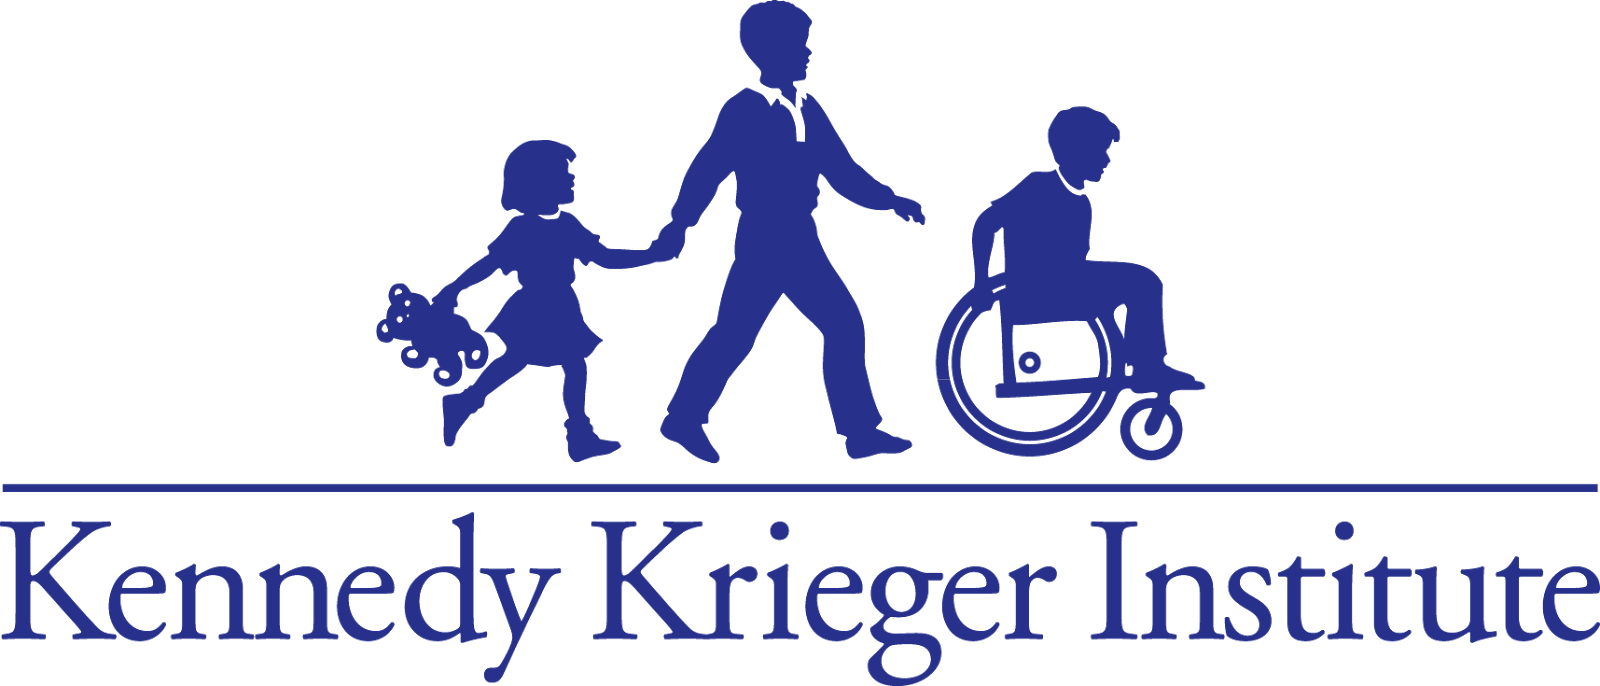 Kennedy Krieger Institute Logo